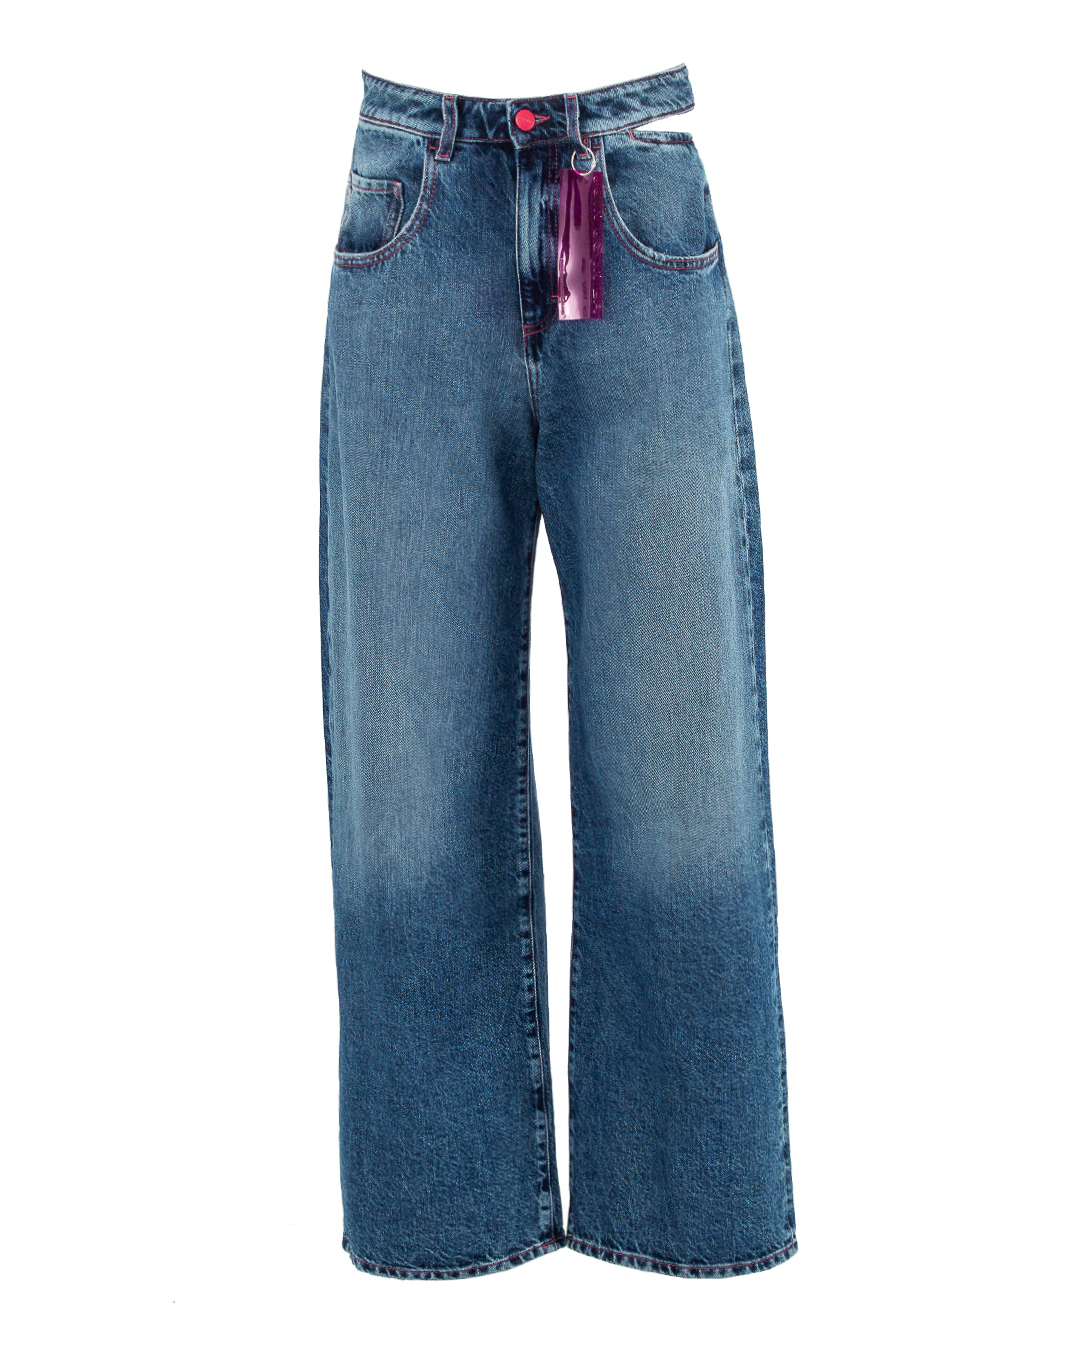 широкие джинсы ICON DENIM pants merry christmas tree plaid ripped distressed denim jeans in blue size s